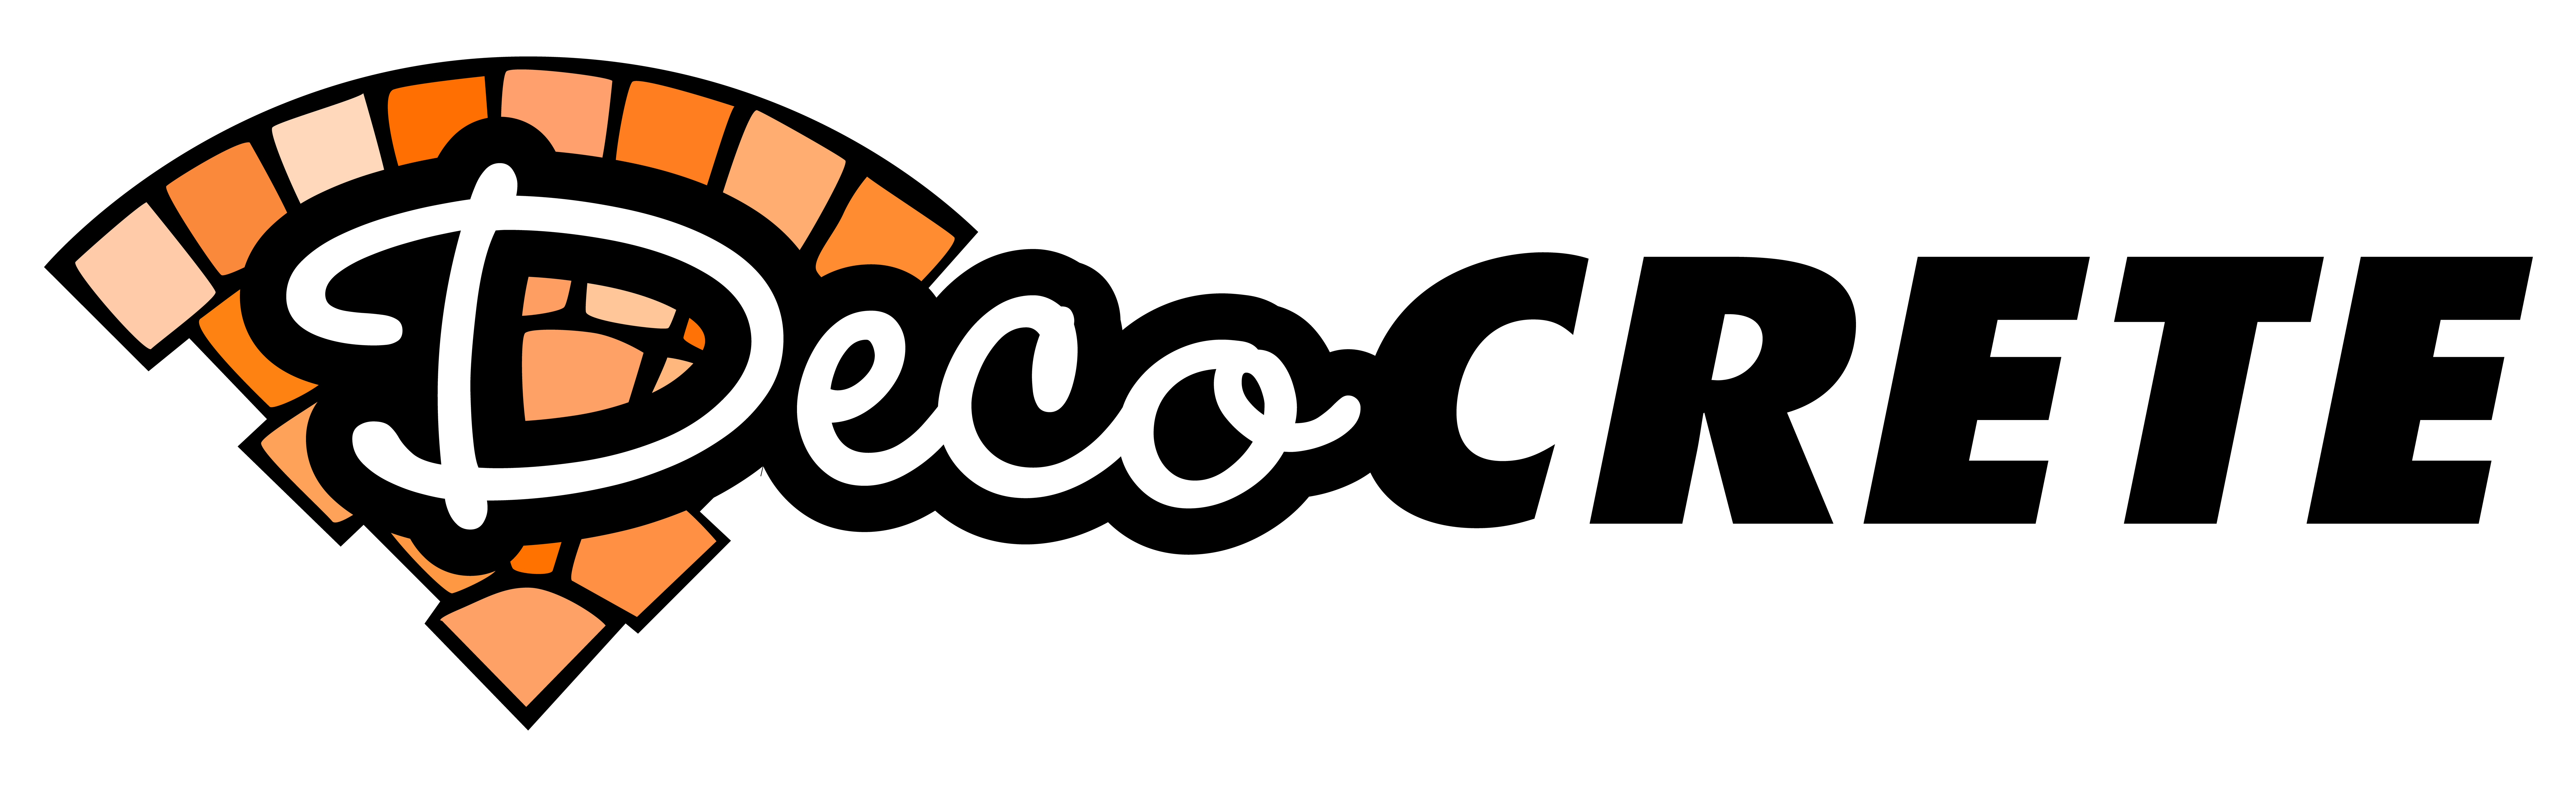 Deco-Crete Supply Logo